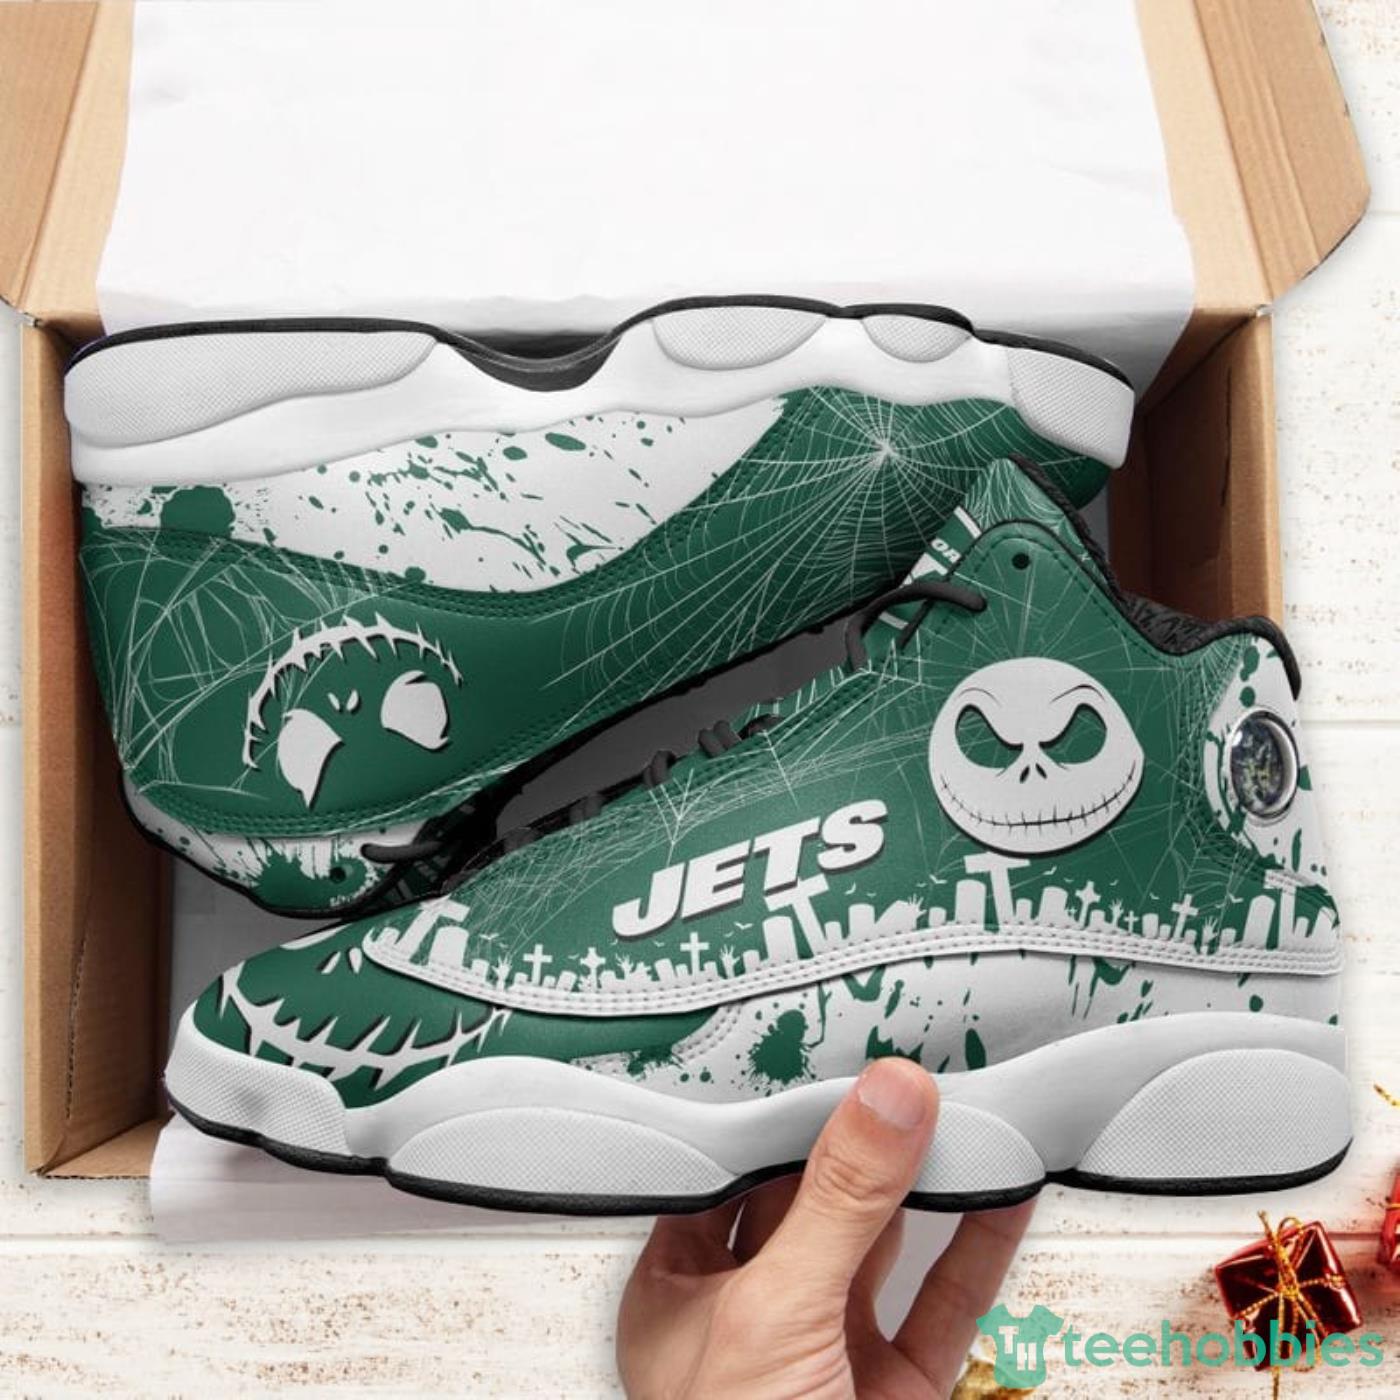 New York Jets Air Jordan 13 Custom Sneakers For Fans - Freedomdesign